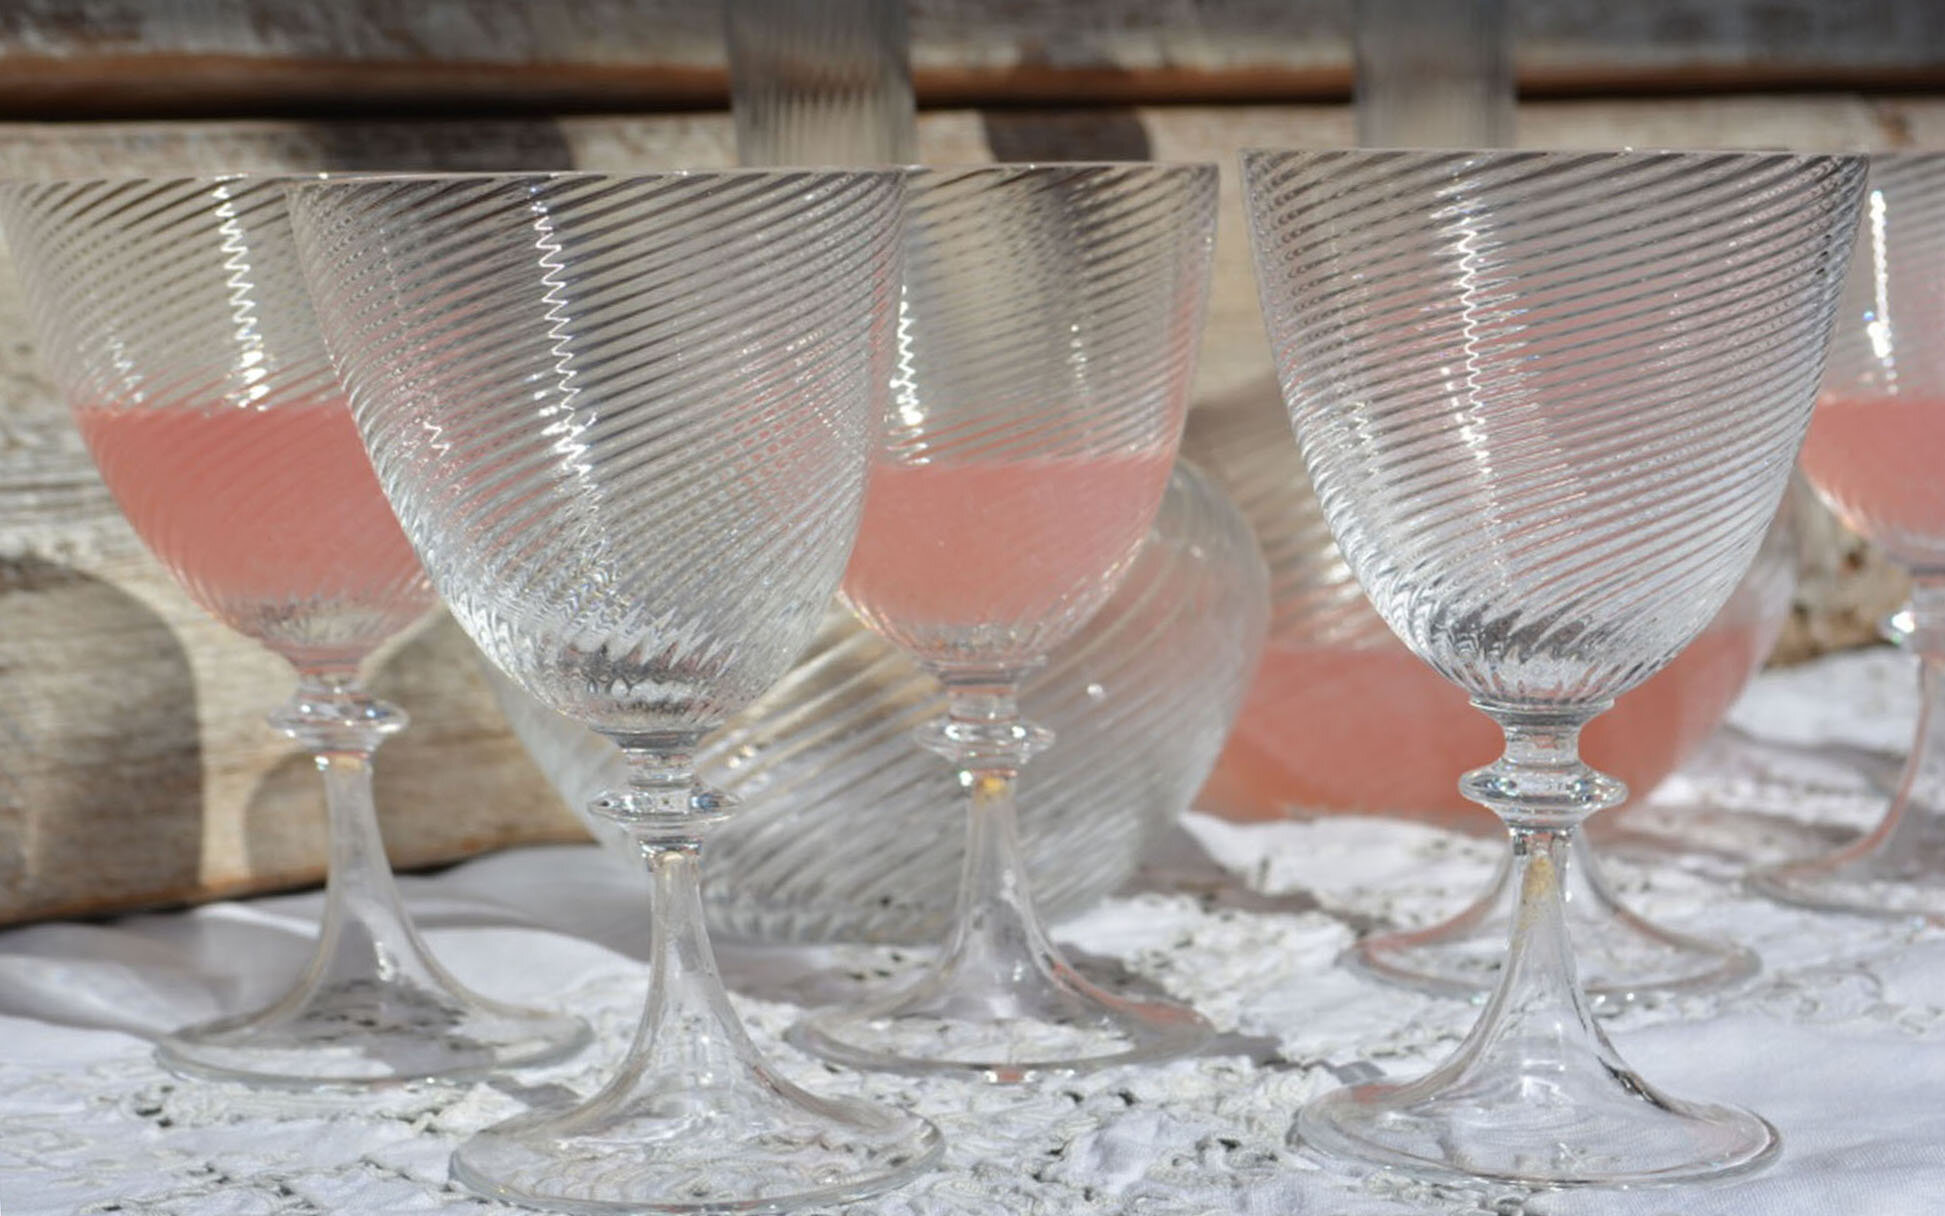 Vintage French Wine Glasses (set of 5)